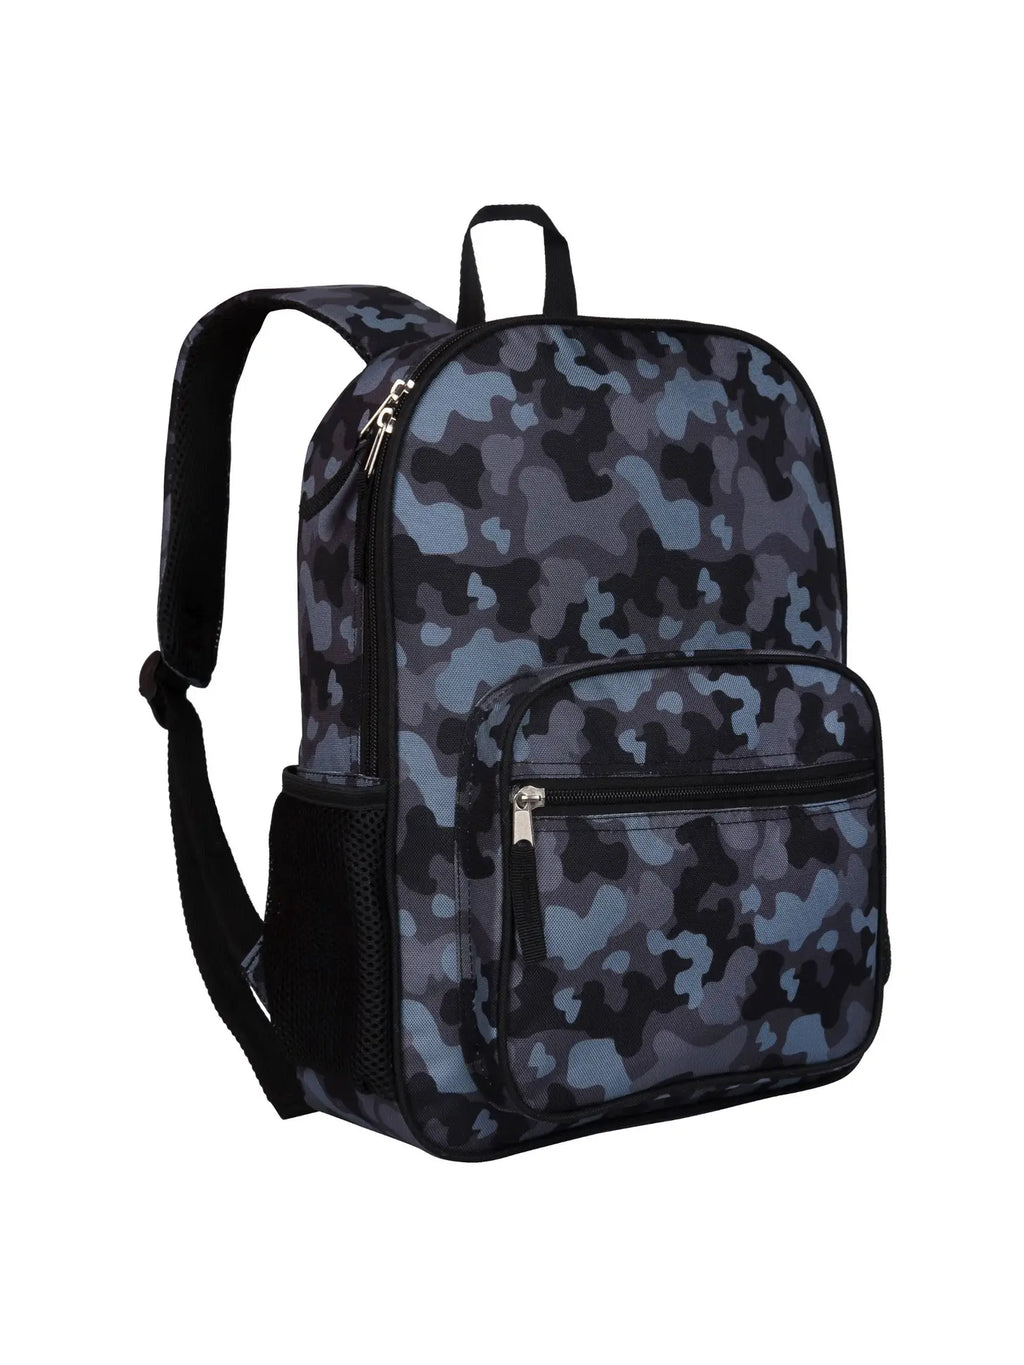 Wildkin | Camo Backpack